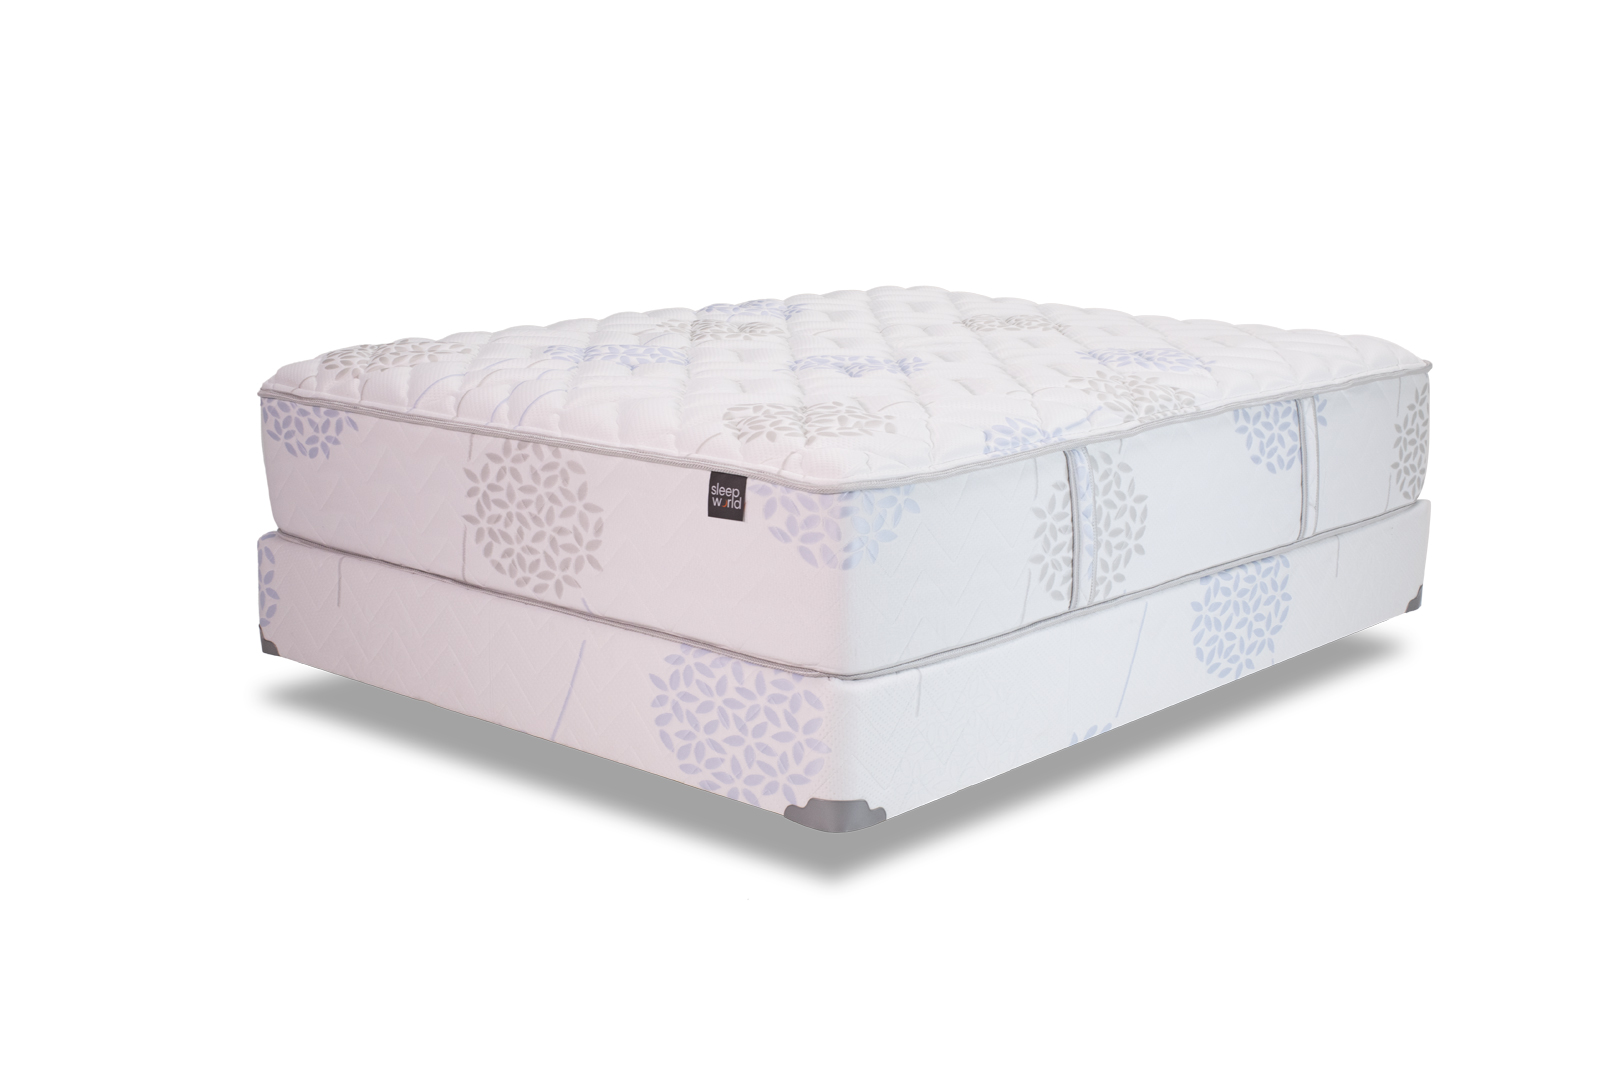 avalon mattress king size price in india